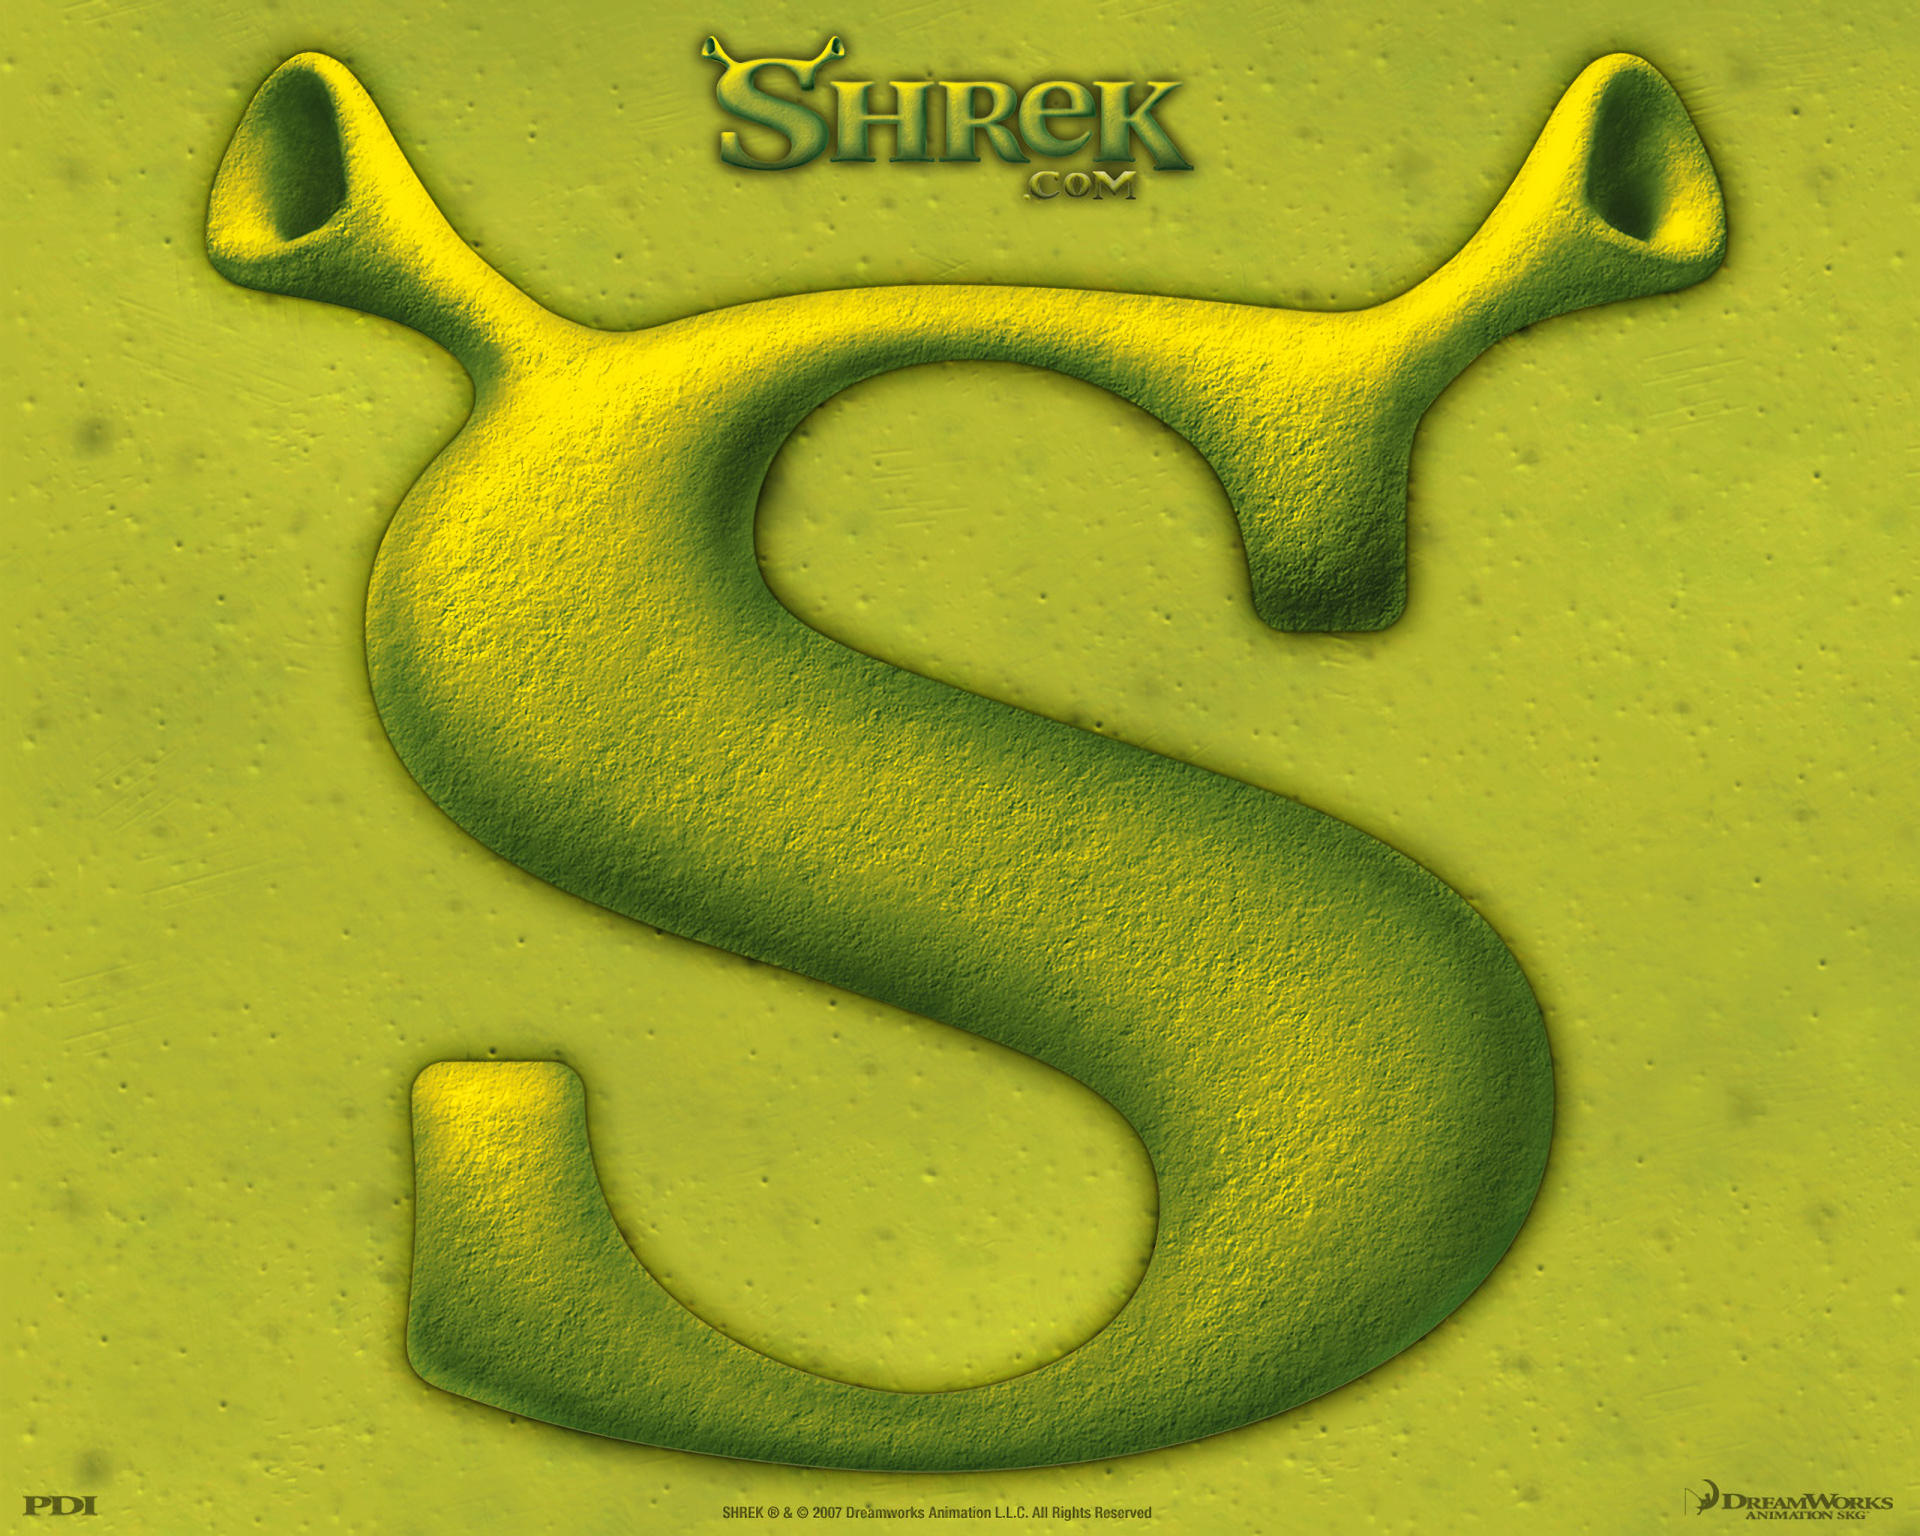 1920x1536 Shrek computer background. Shrek HD Wallpaper